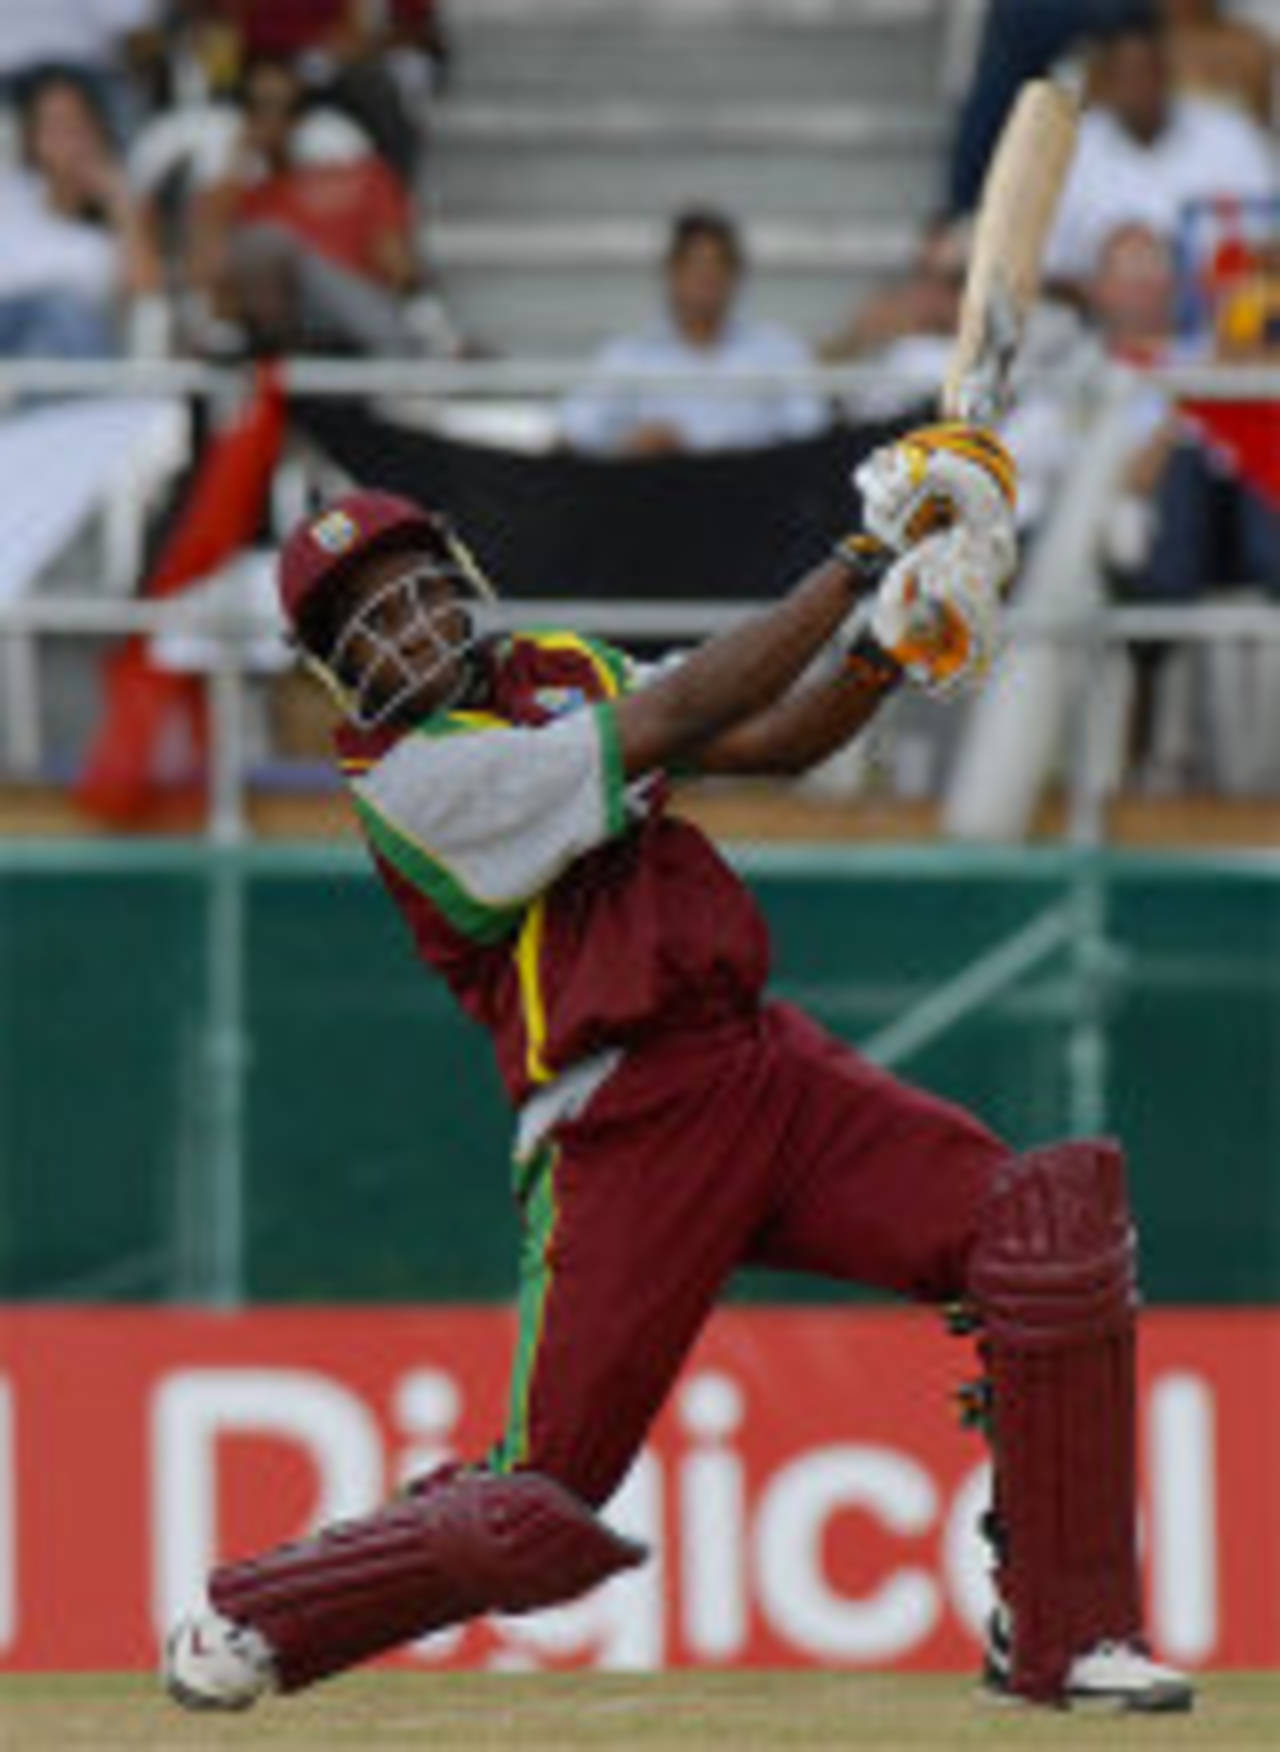 Dwayne Bravo opens his shoulders on his way to 36, West Indies v Sri Lanka, 1st ODI, Trinidad, April 10, 2008